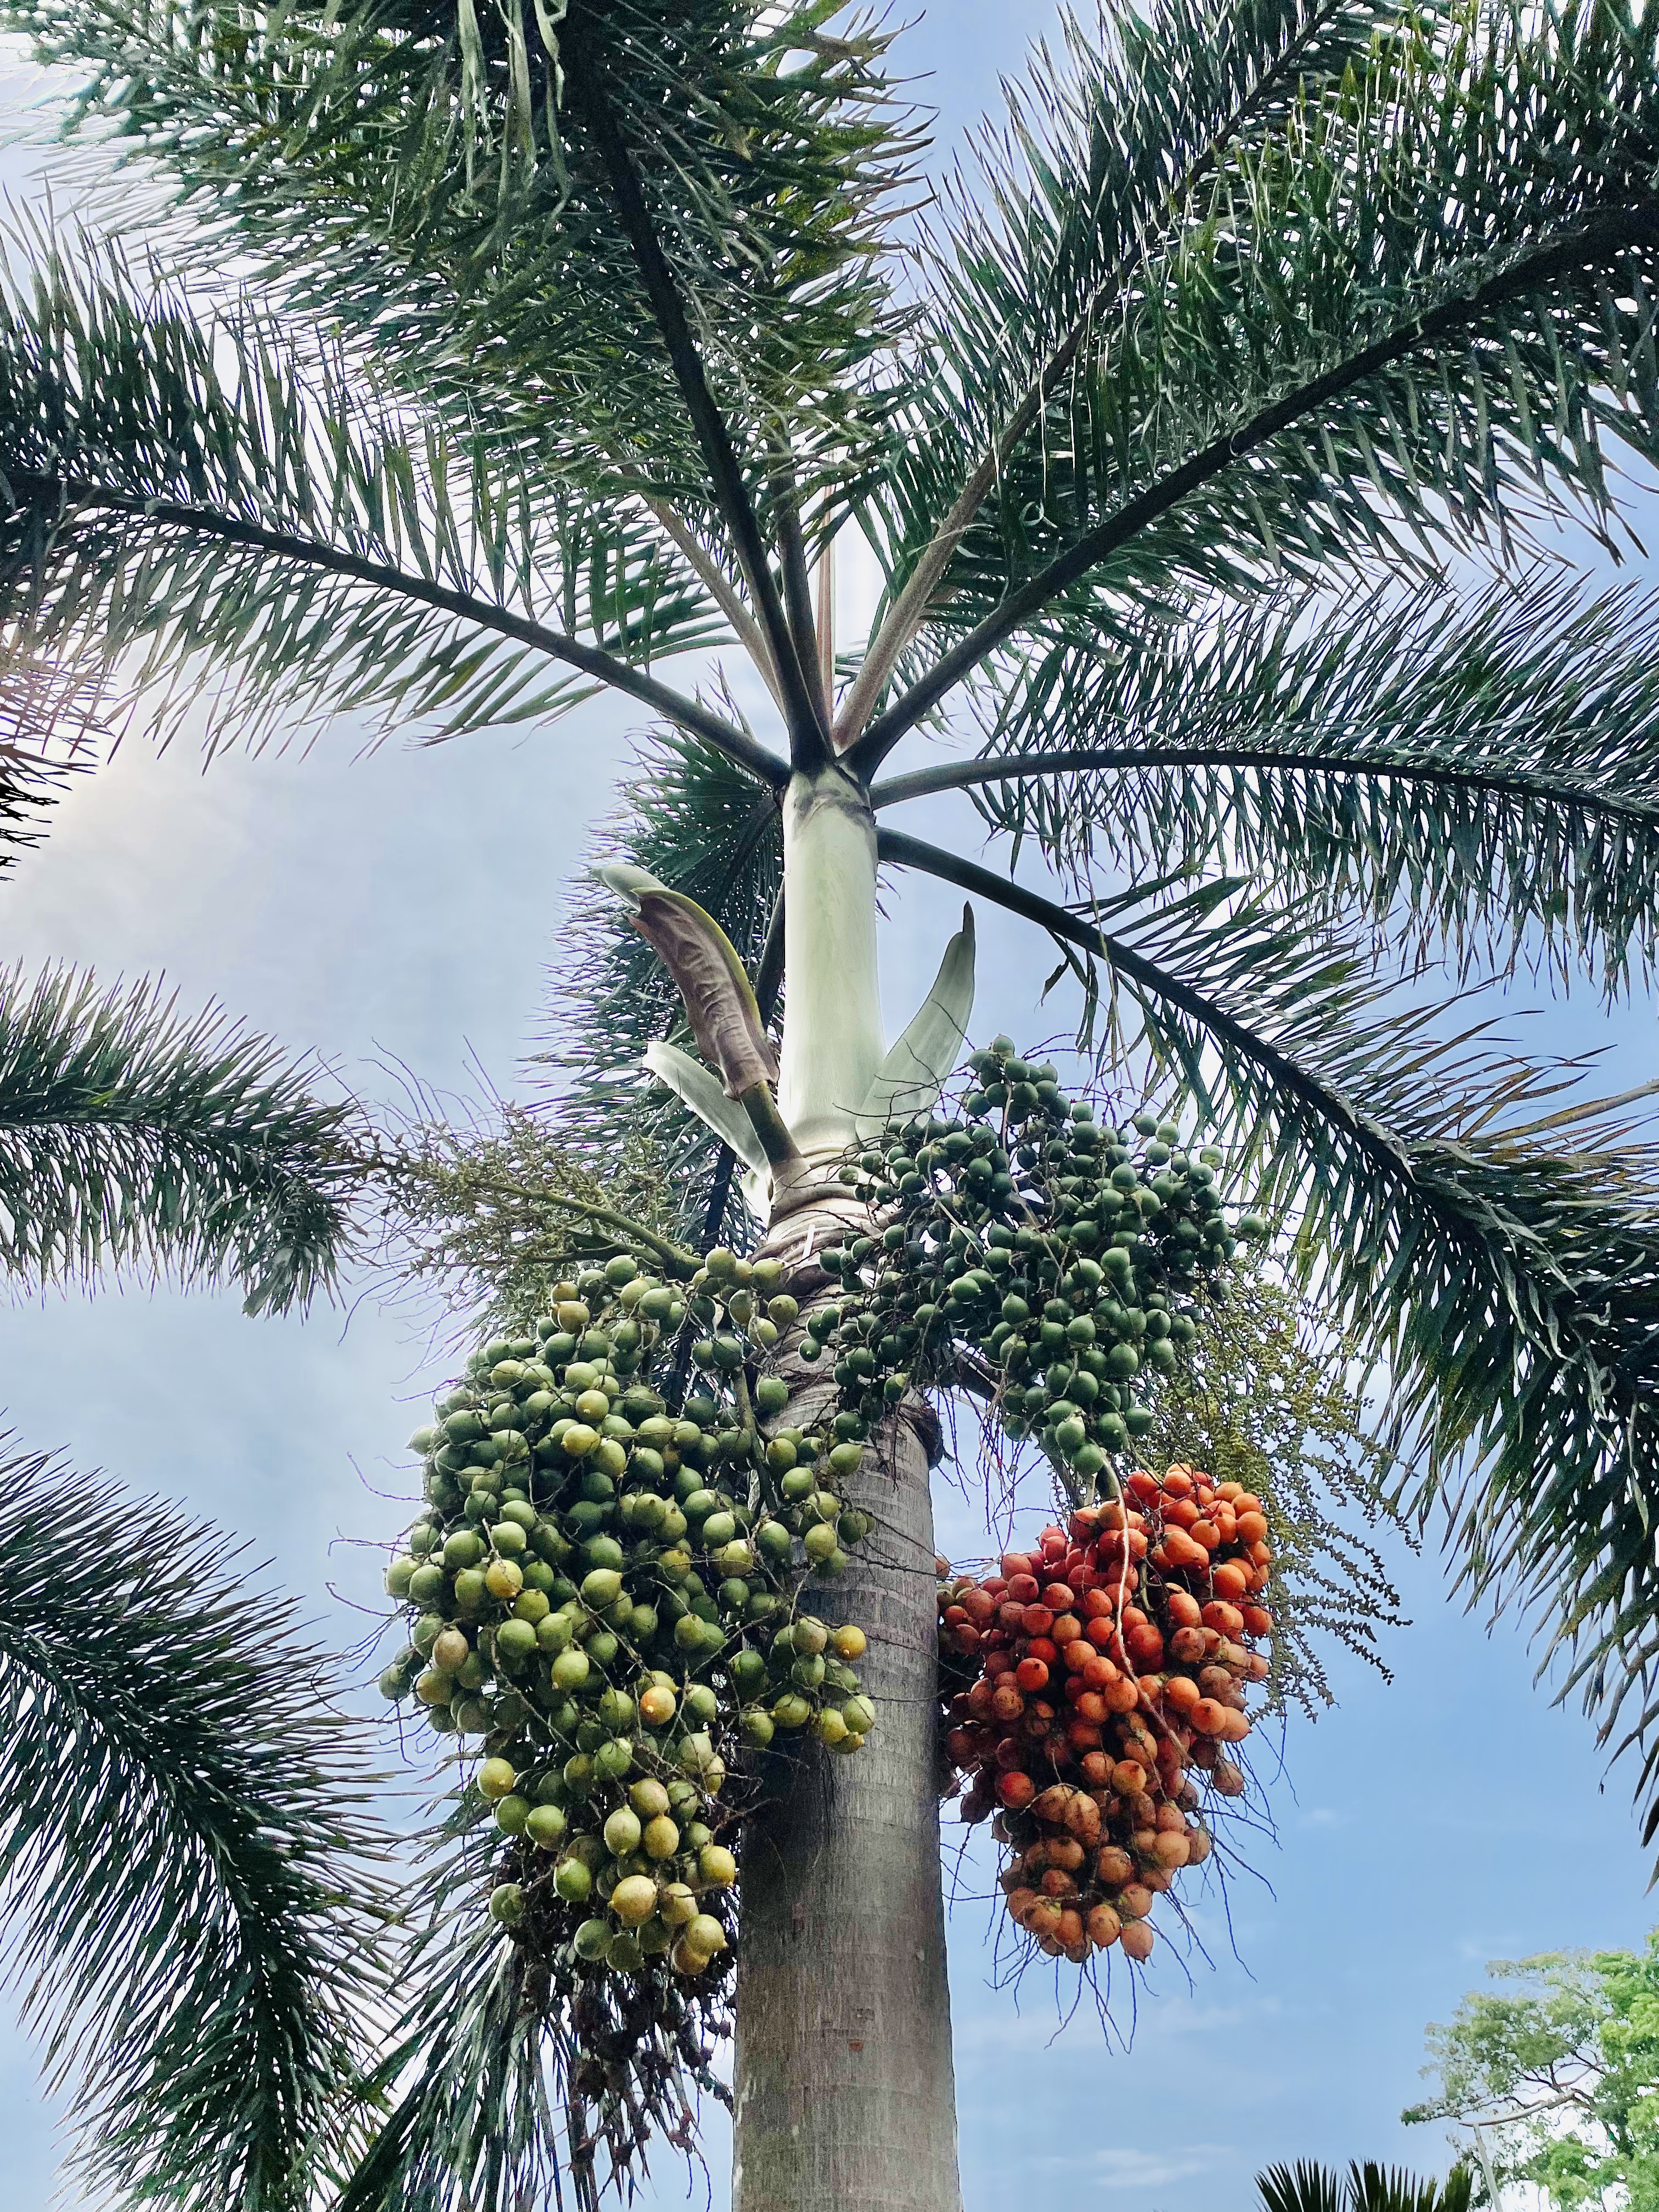 King Palm Tree